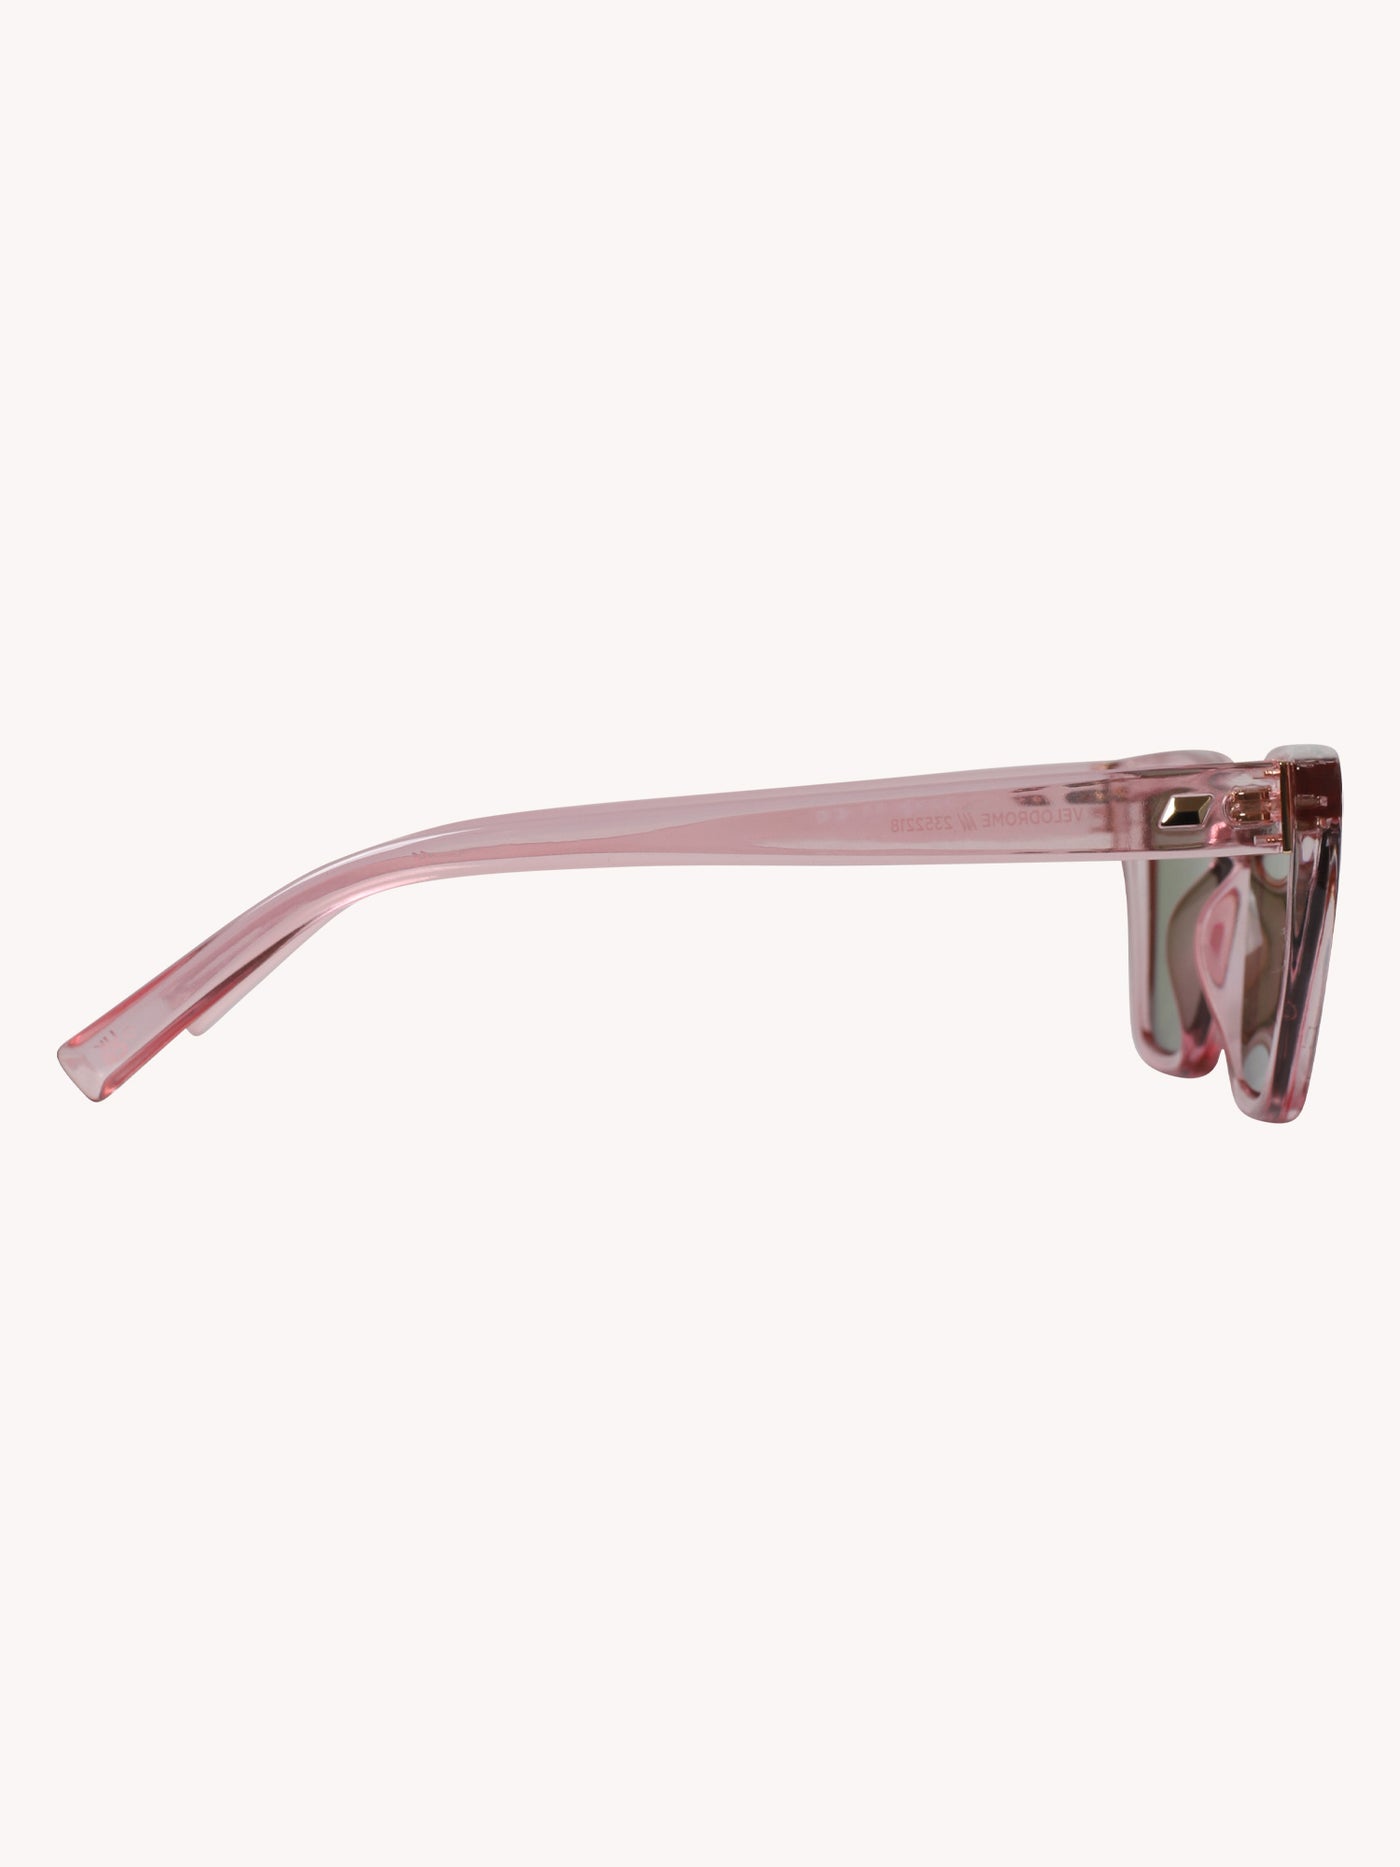 Velodrome Sunglasses in Pink